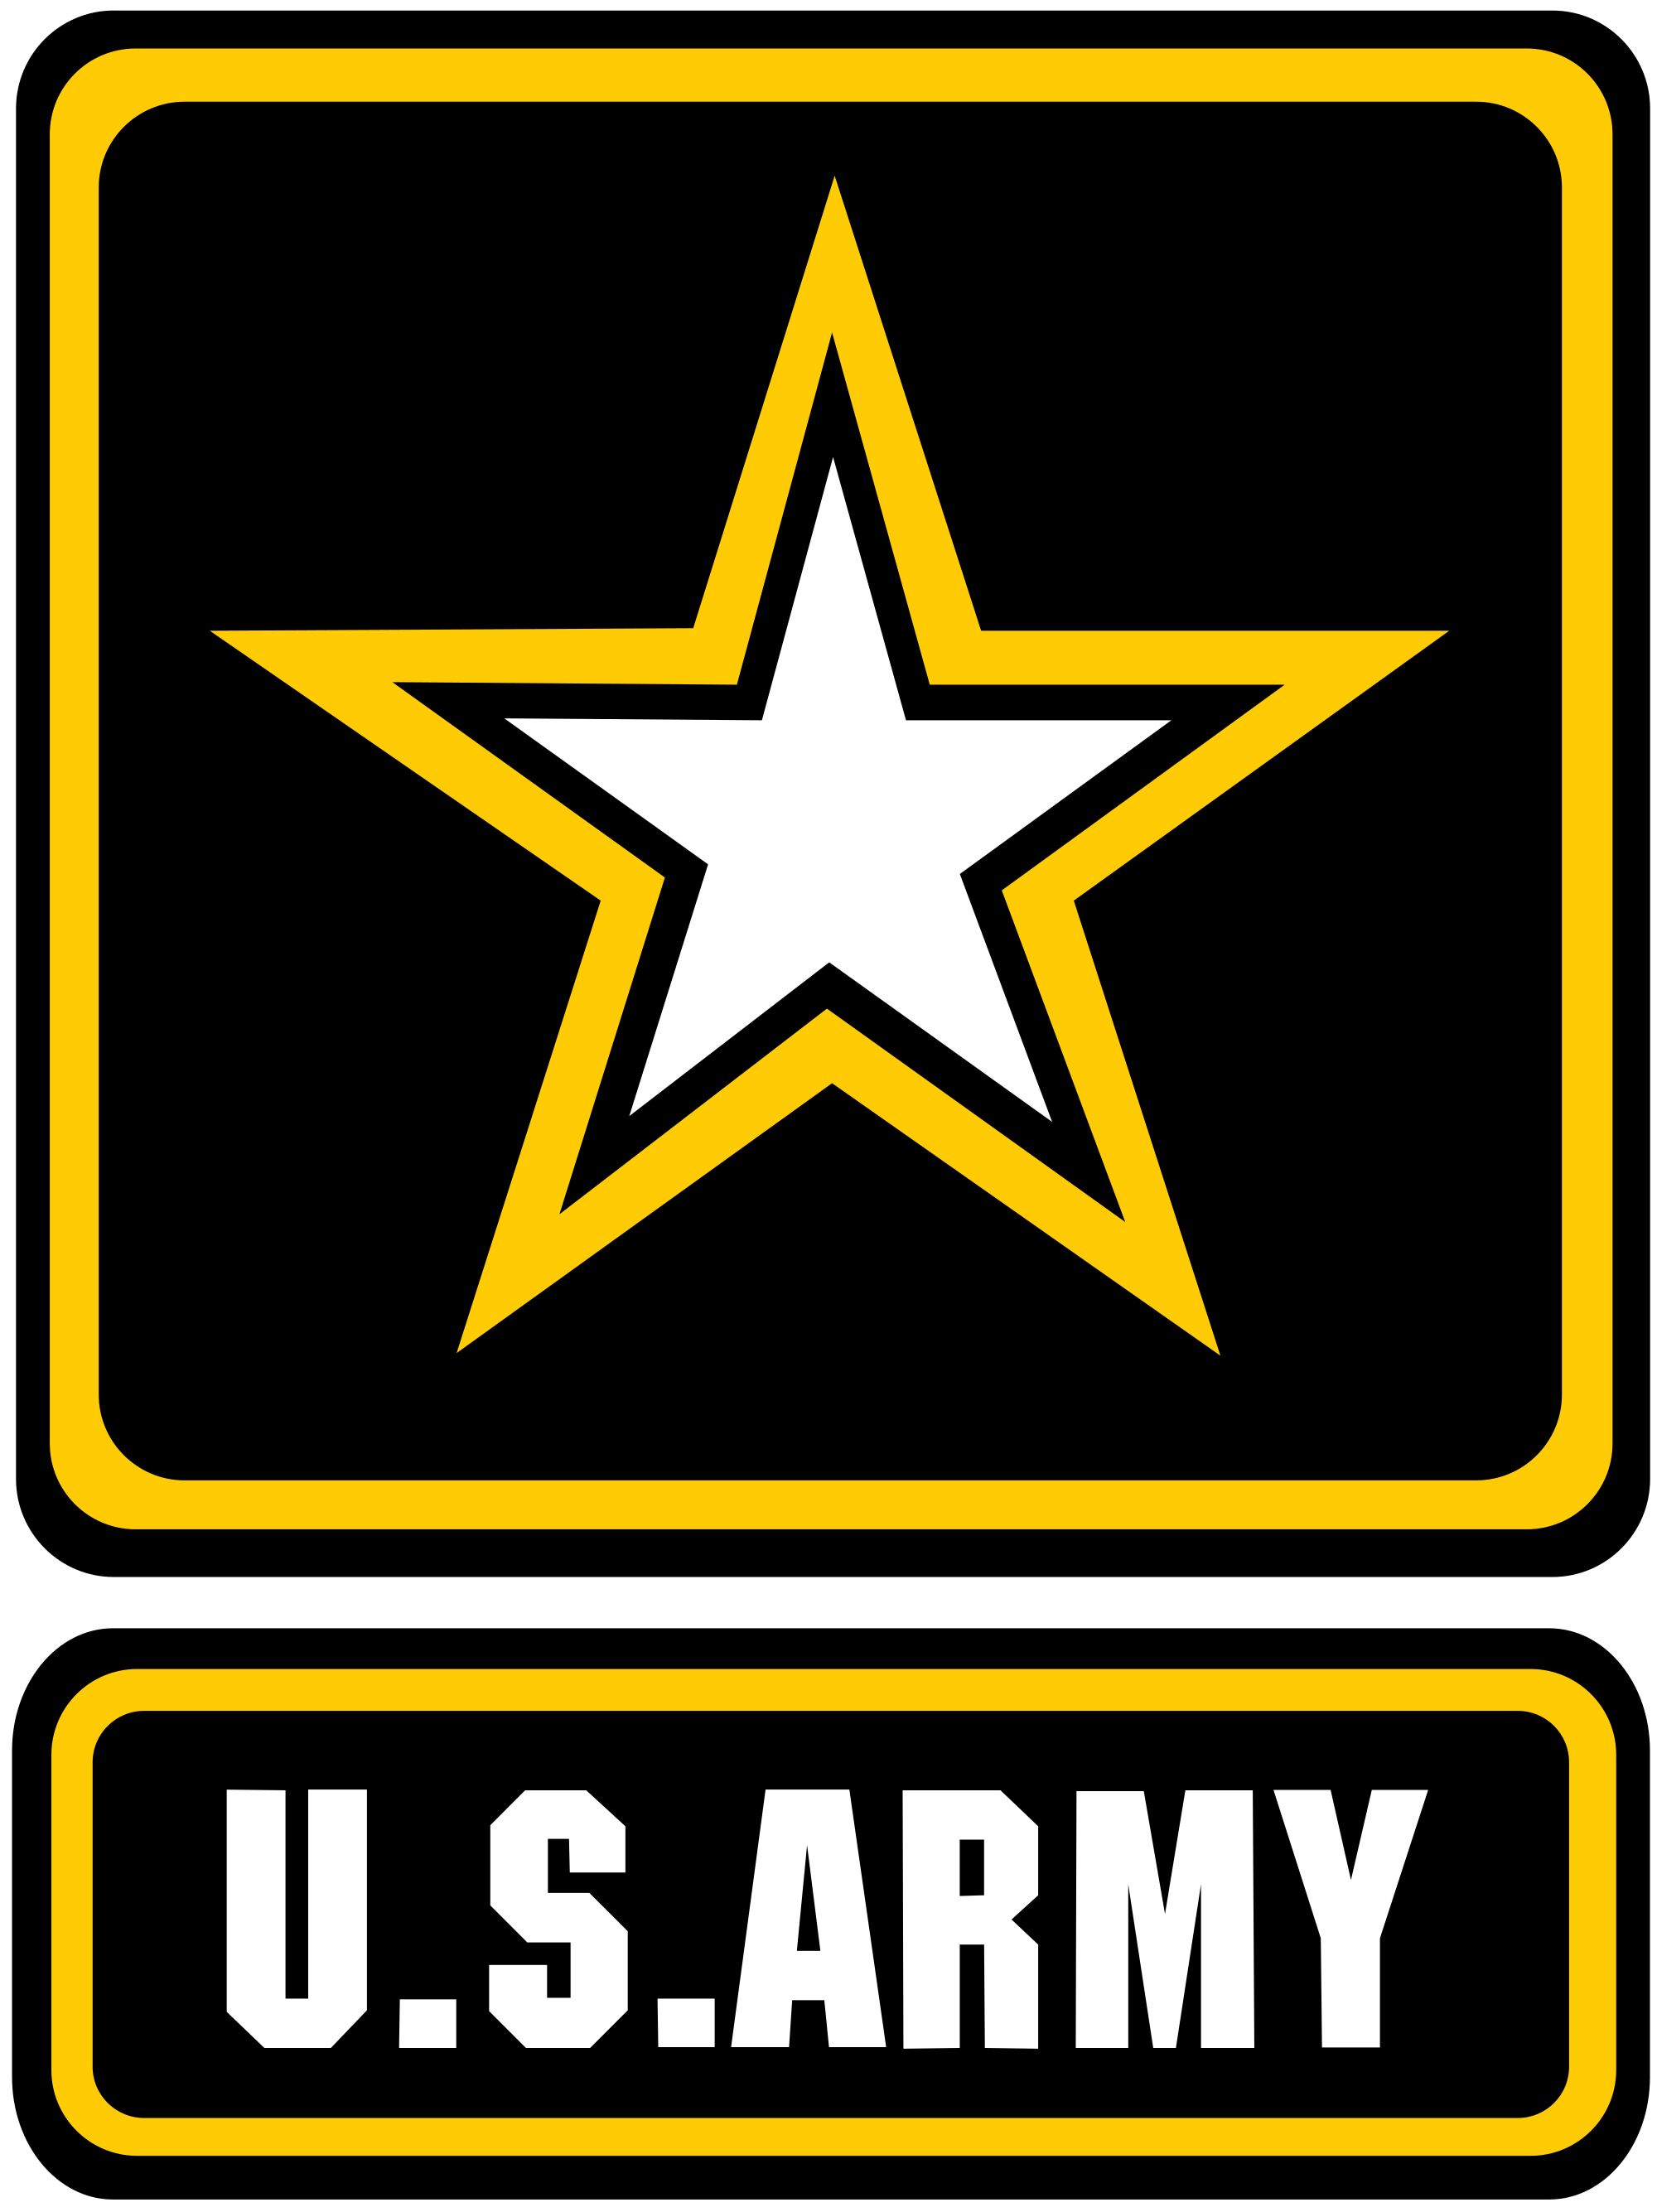 U.S. Army Logo - US Army logo.svg